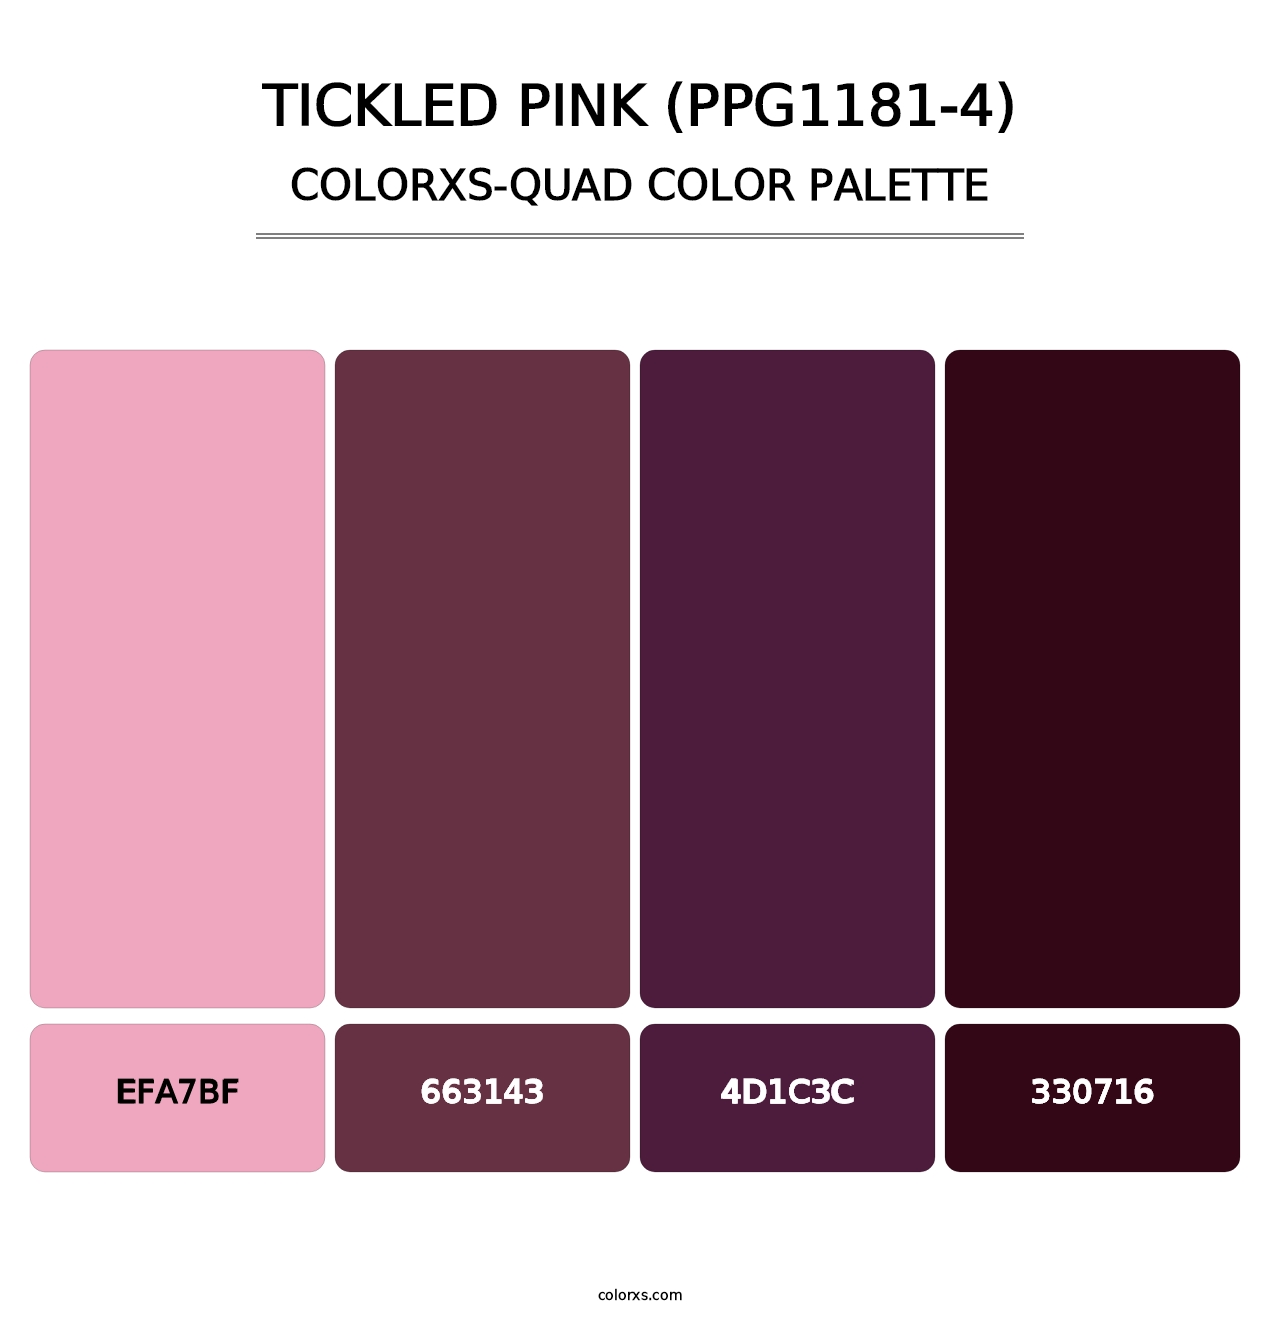 Tickled Pink (PPG1181-4) - Colorxs Quad Palette